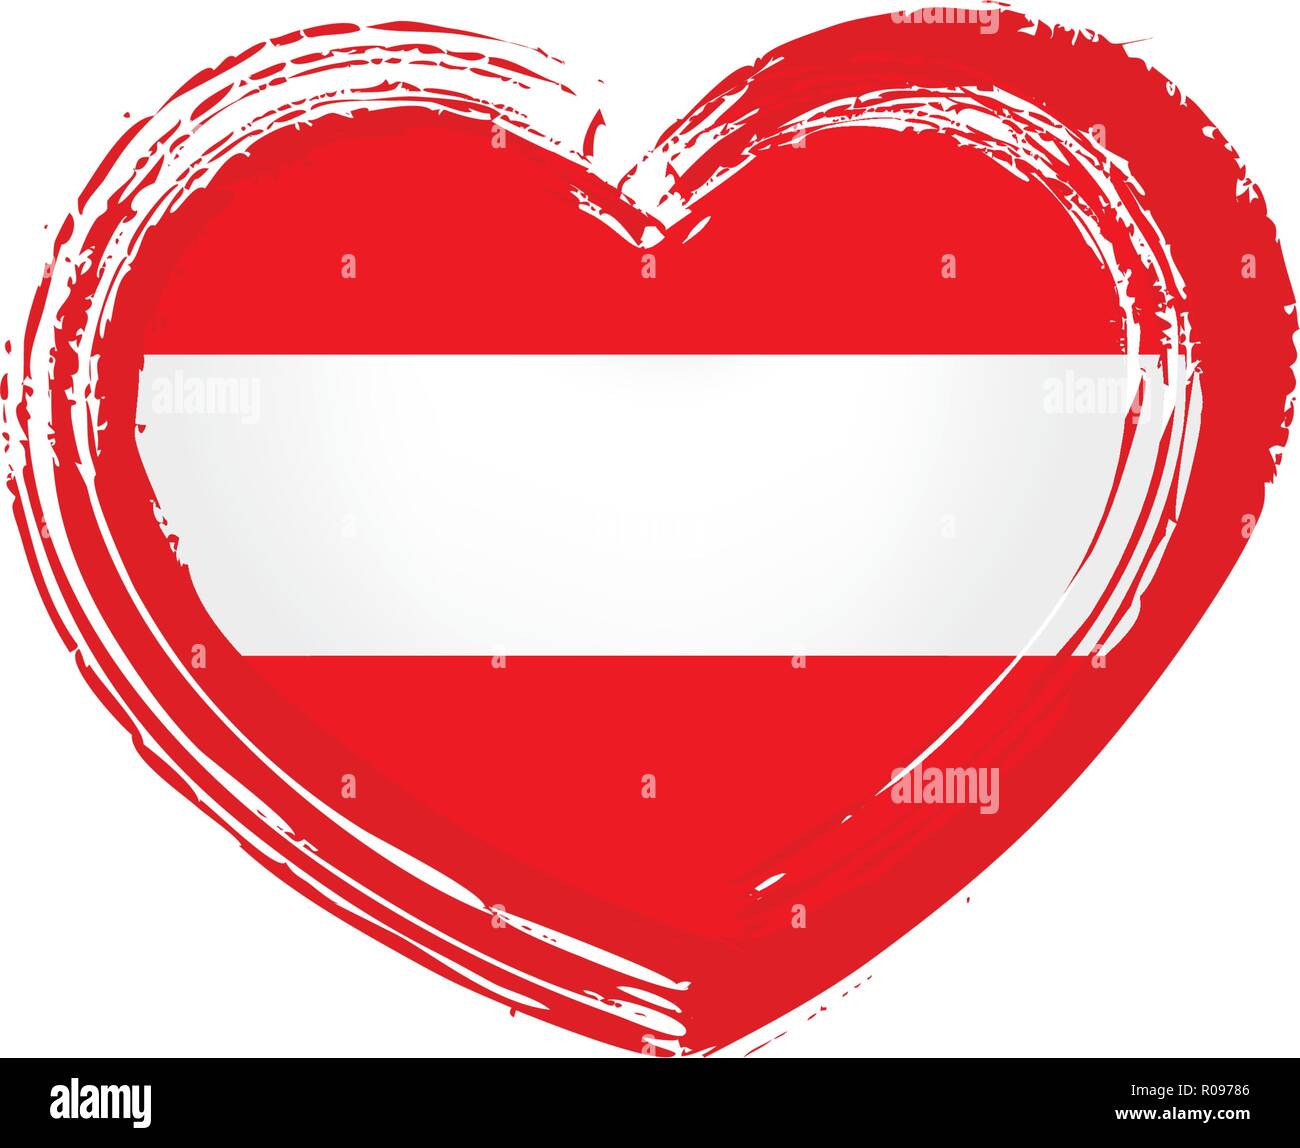 Austria flag, vector illustration on a white background Stock Vector